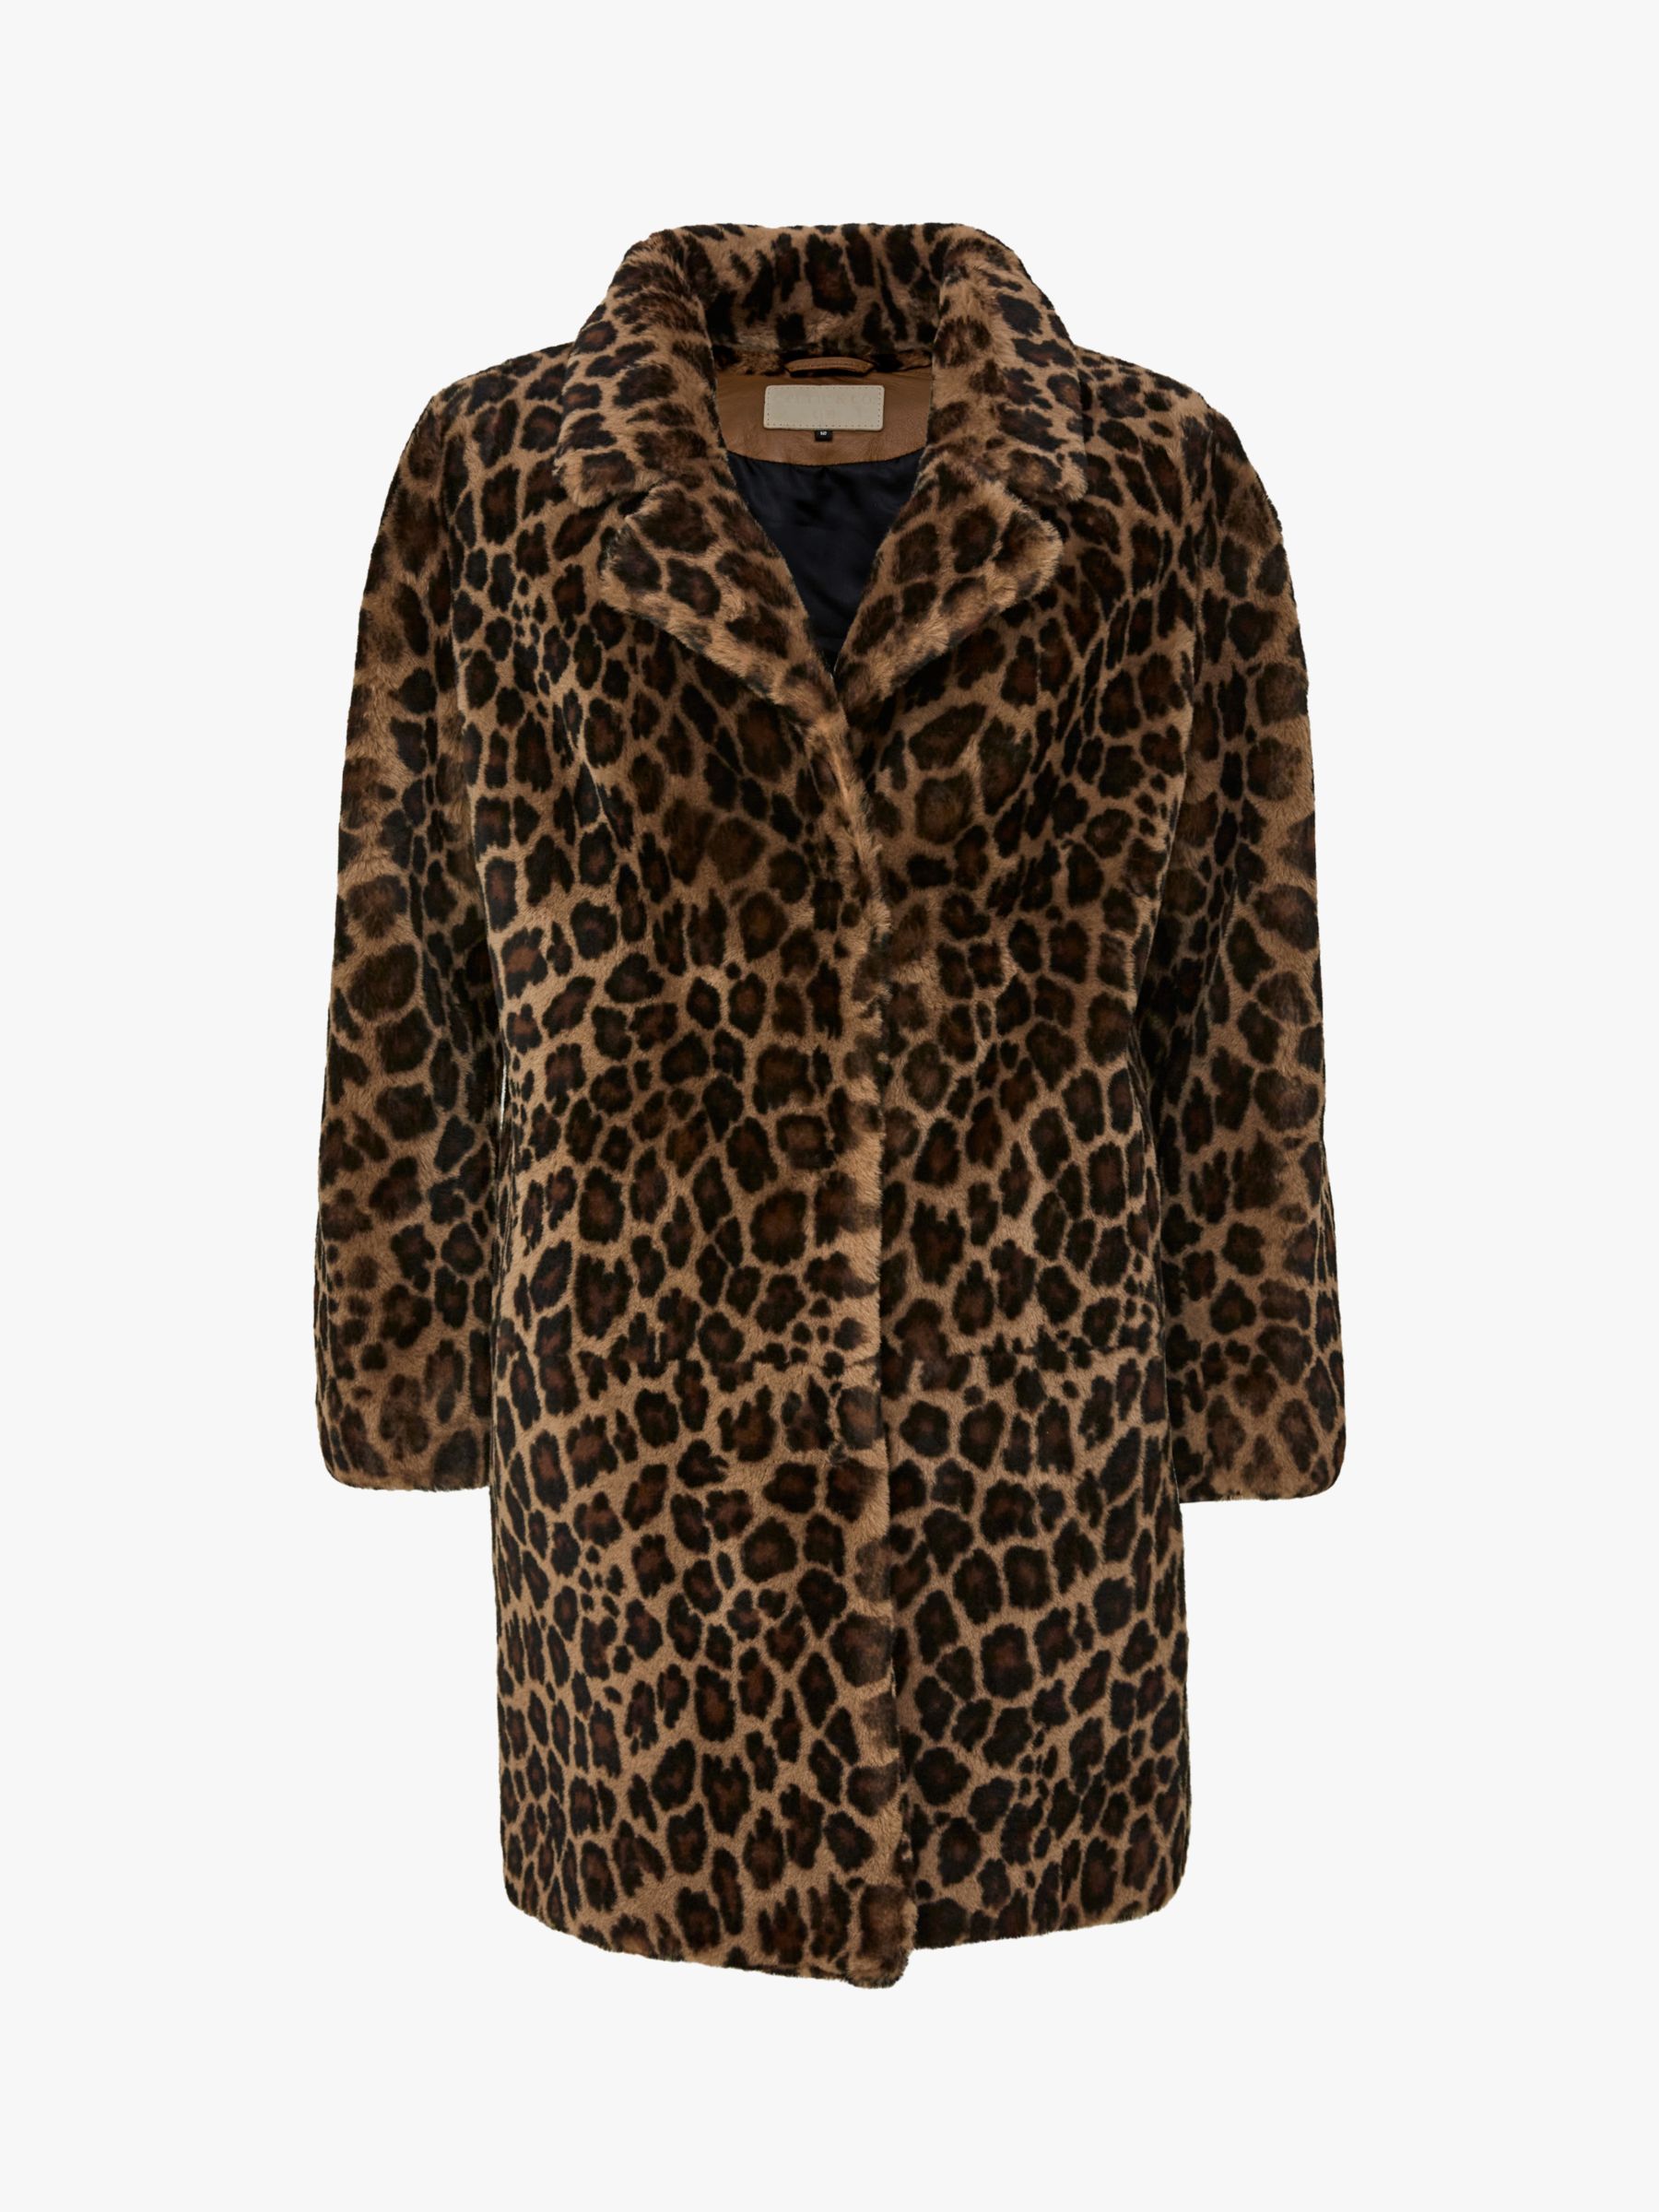 Celtic & Co. Leopard Print Sheepskin Coat, Brown at John Lewis & Partners